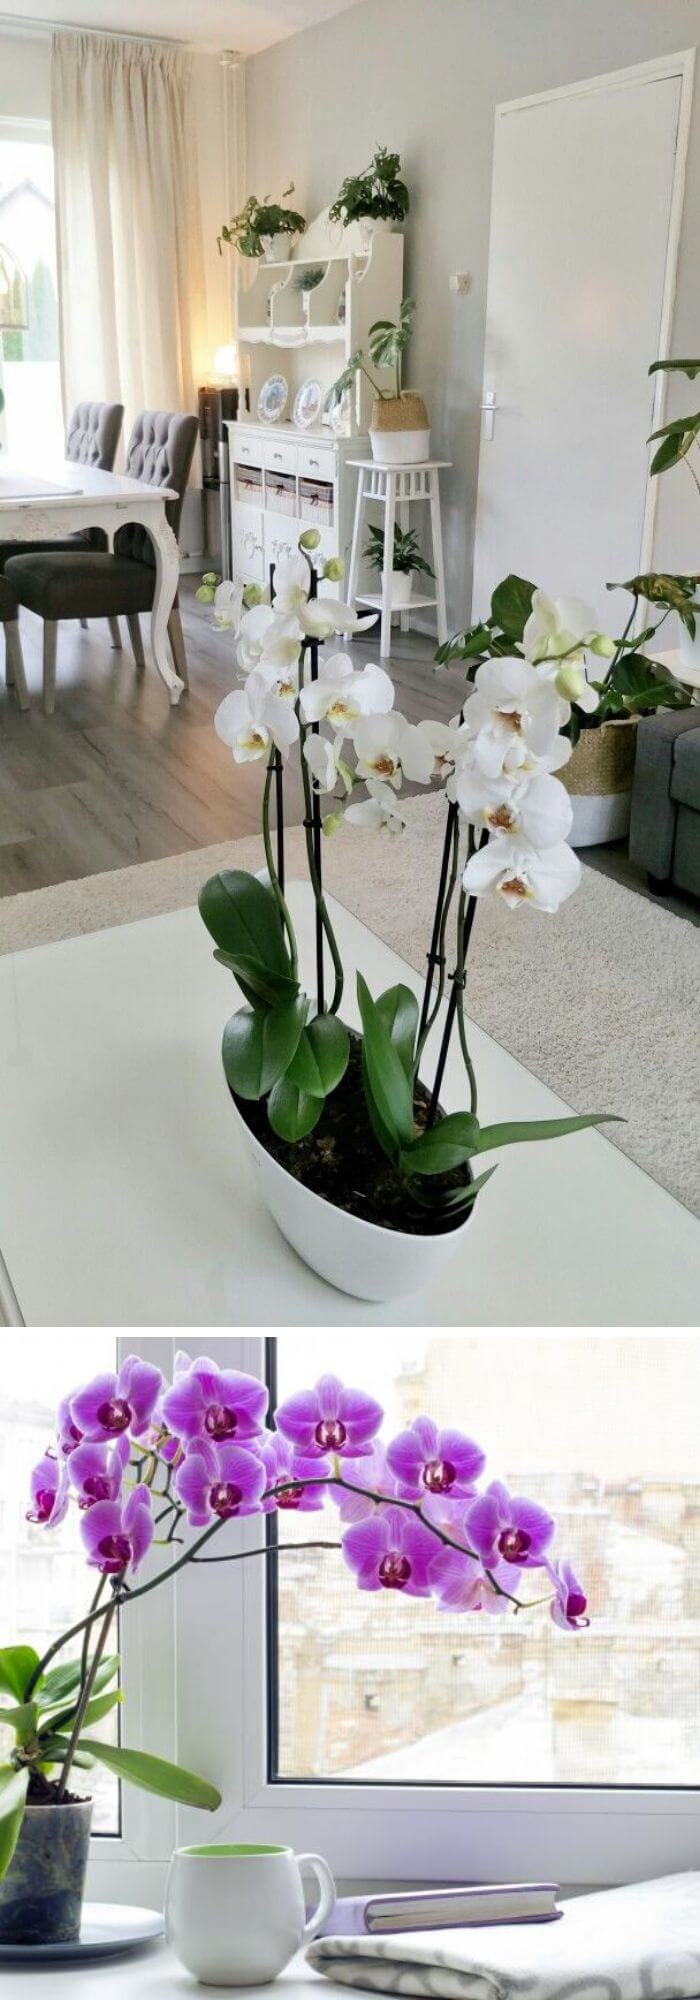 1 living room plants